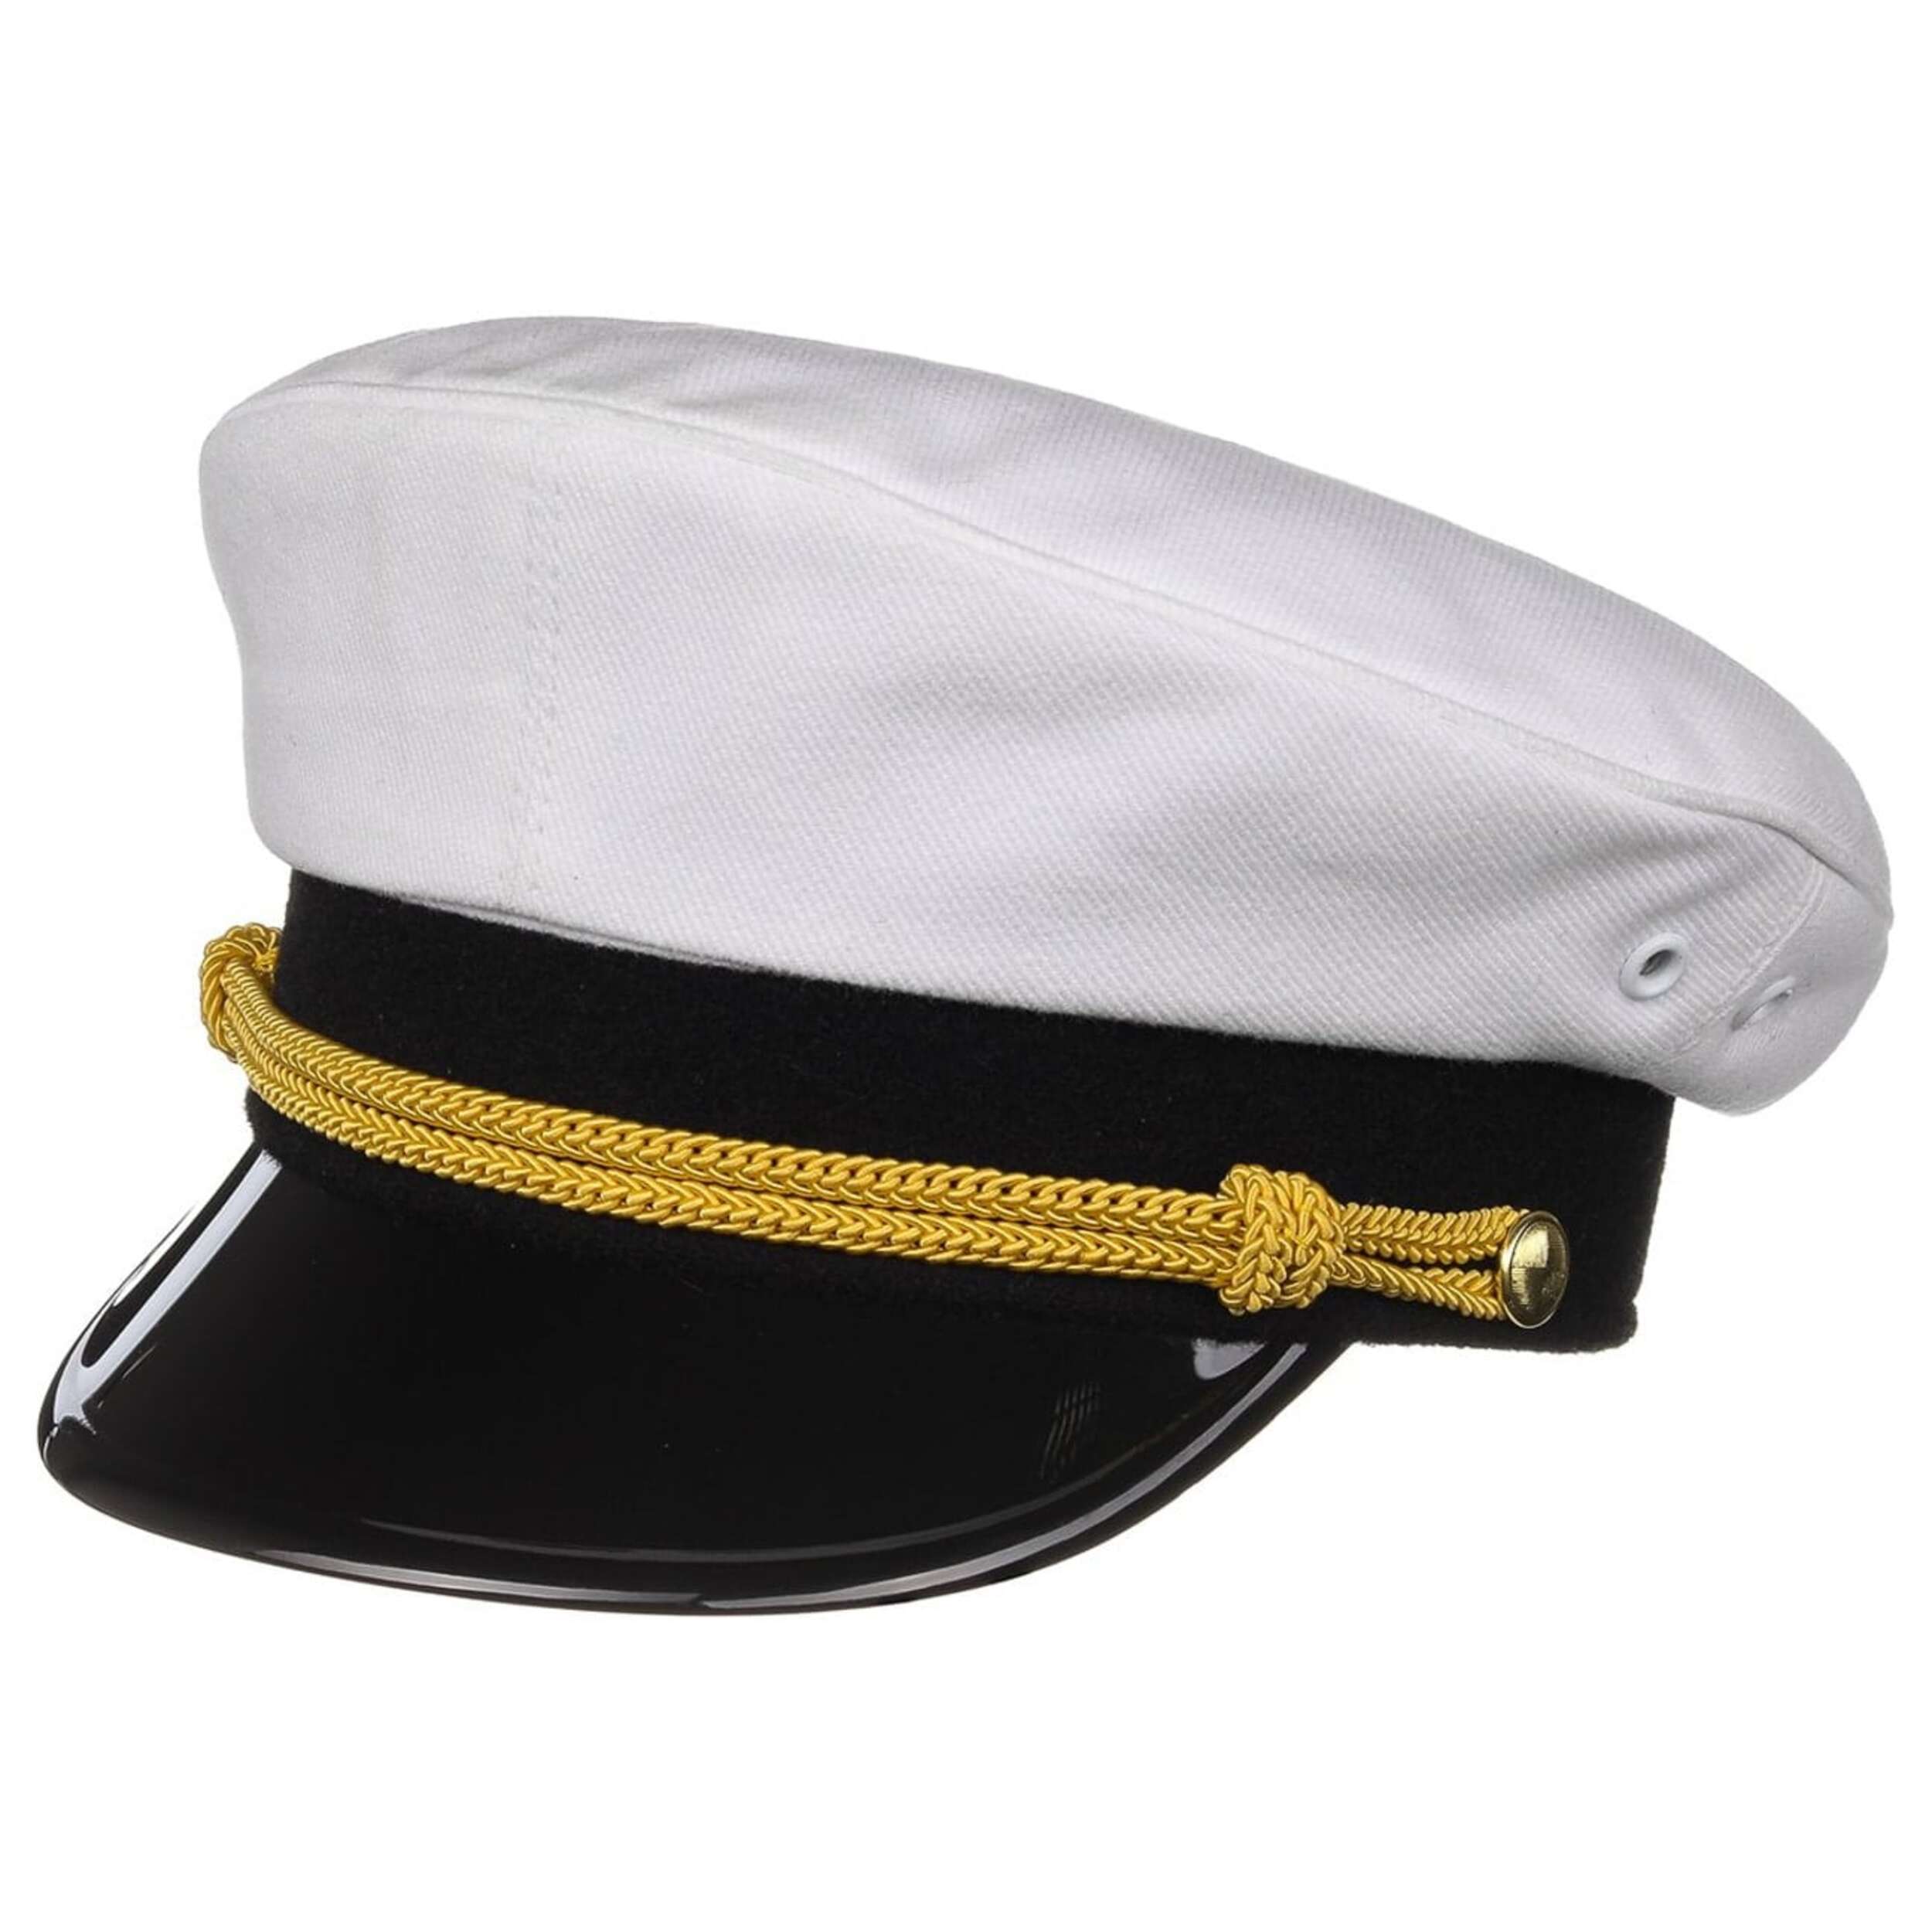 a captin hat